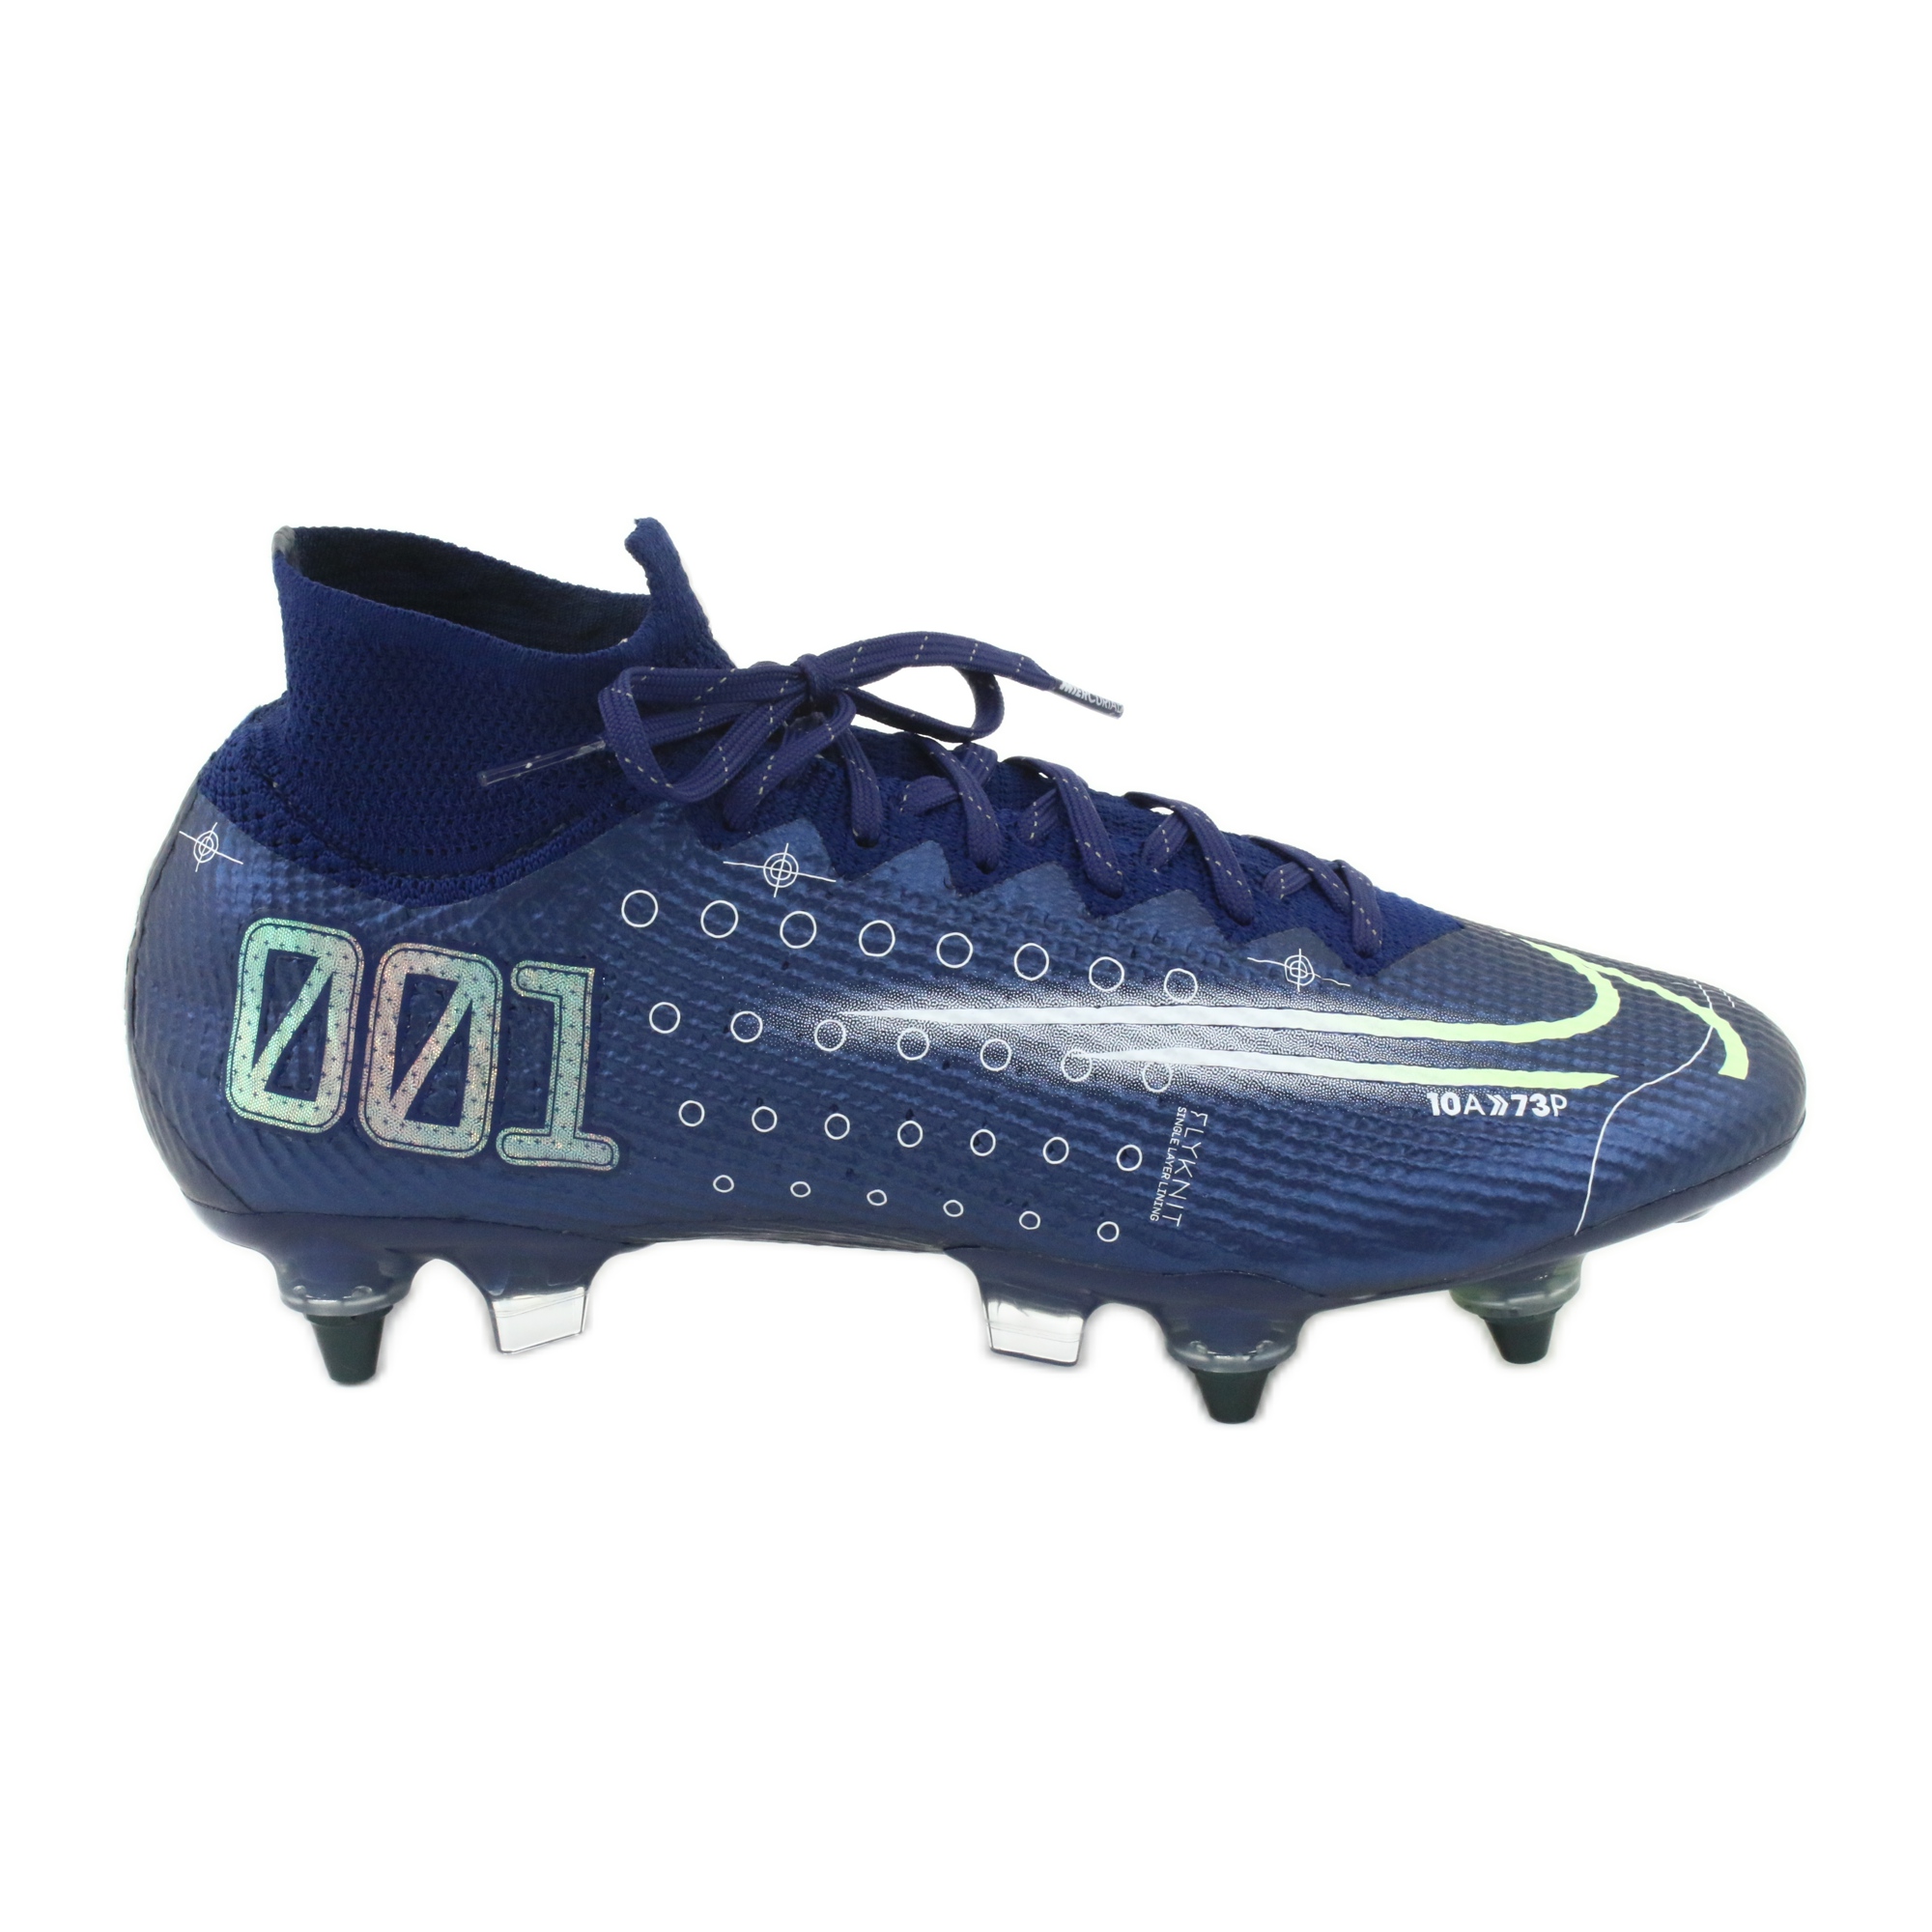 Buty piłkarskie Nike Superfly 7 Elite Mds SG-Pro Ac M CK0013-401 niebieskie